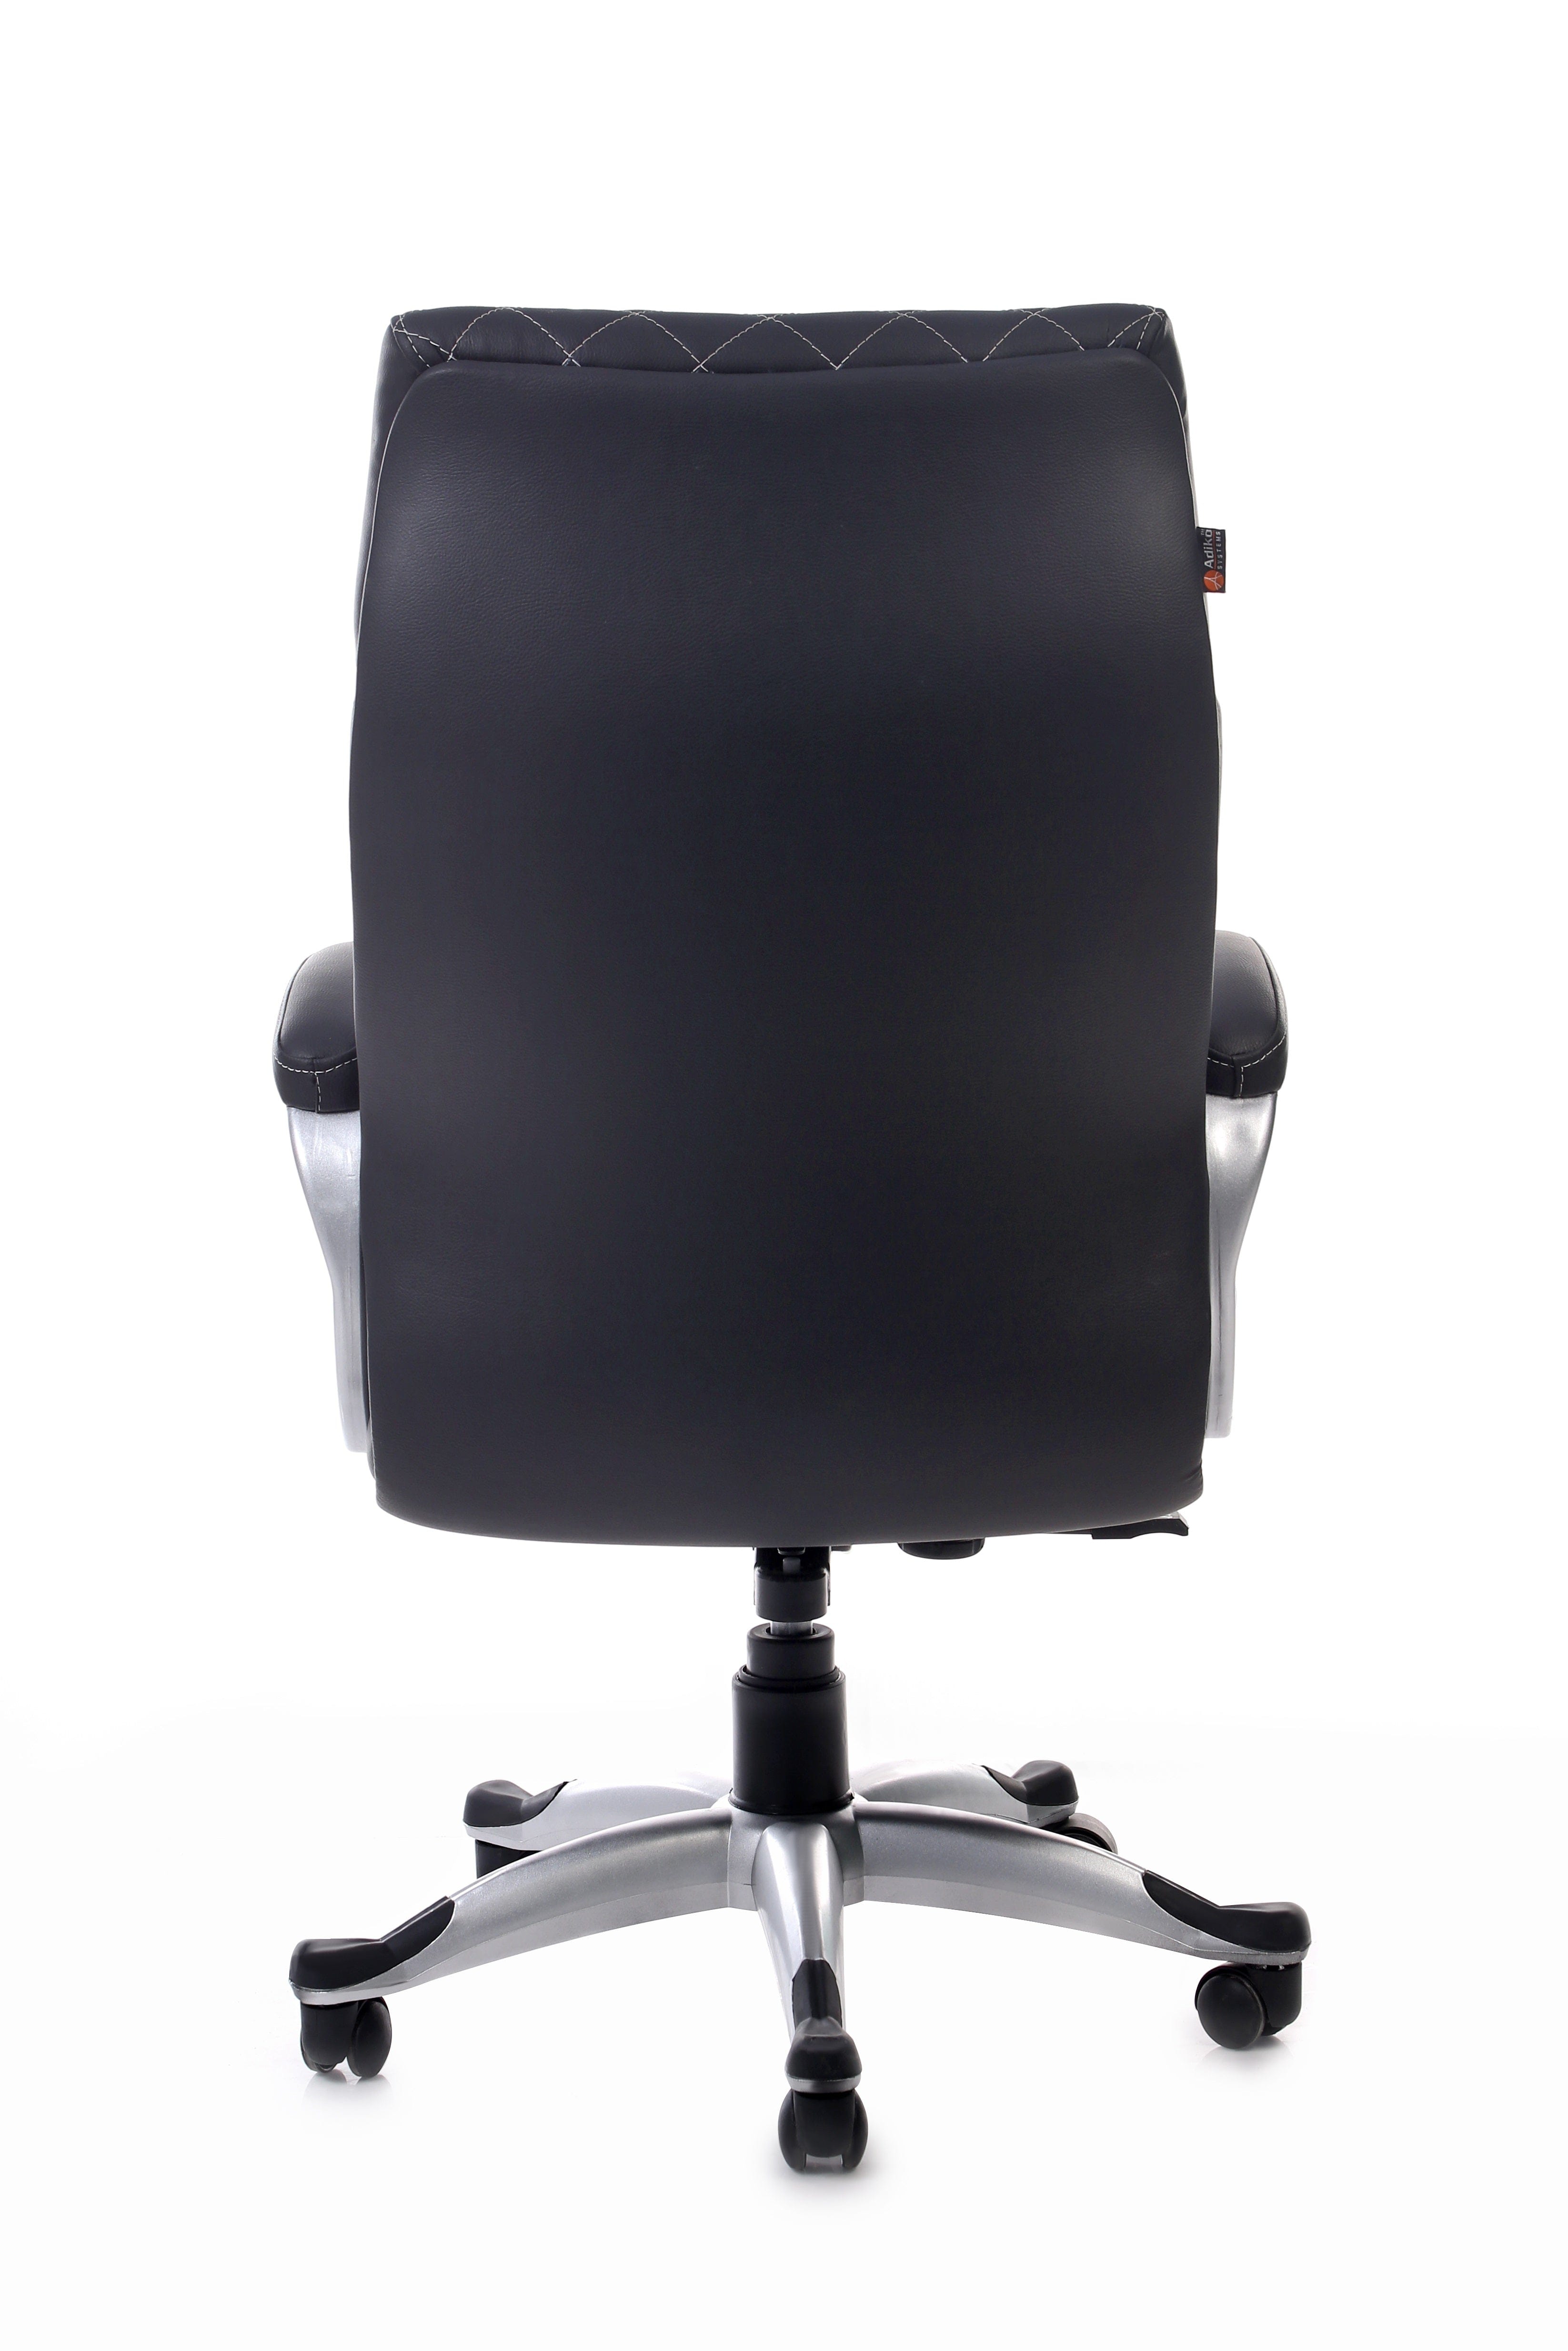 Adiko High Back Executive Revolving Office Chair in Black